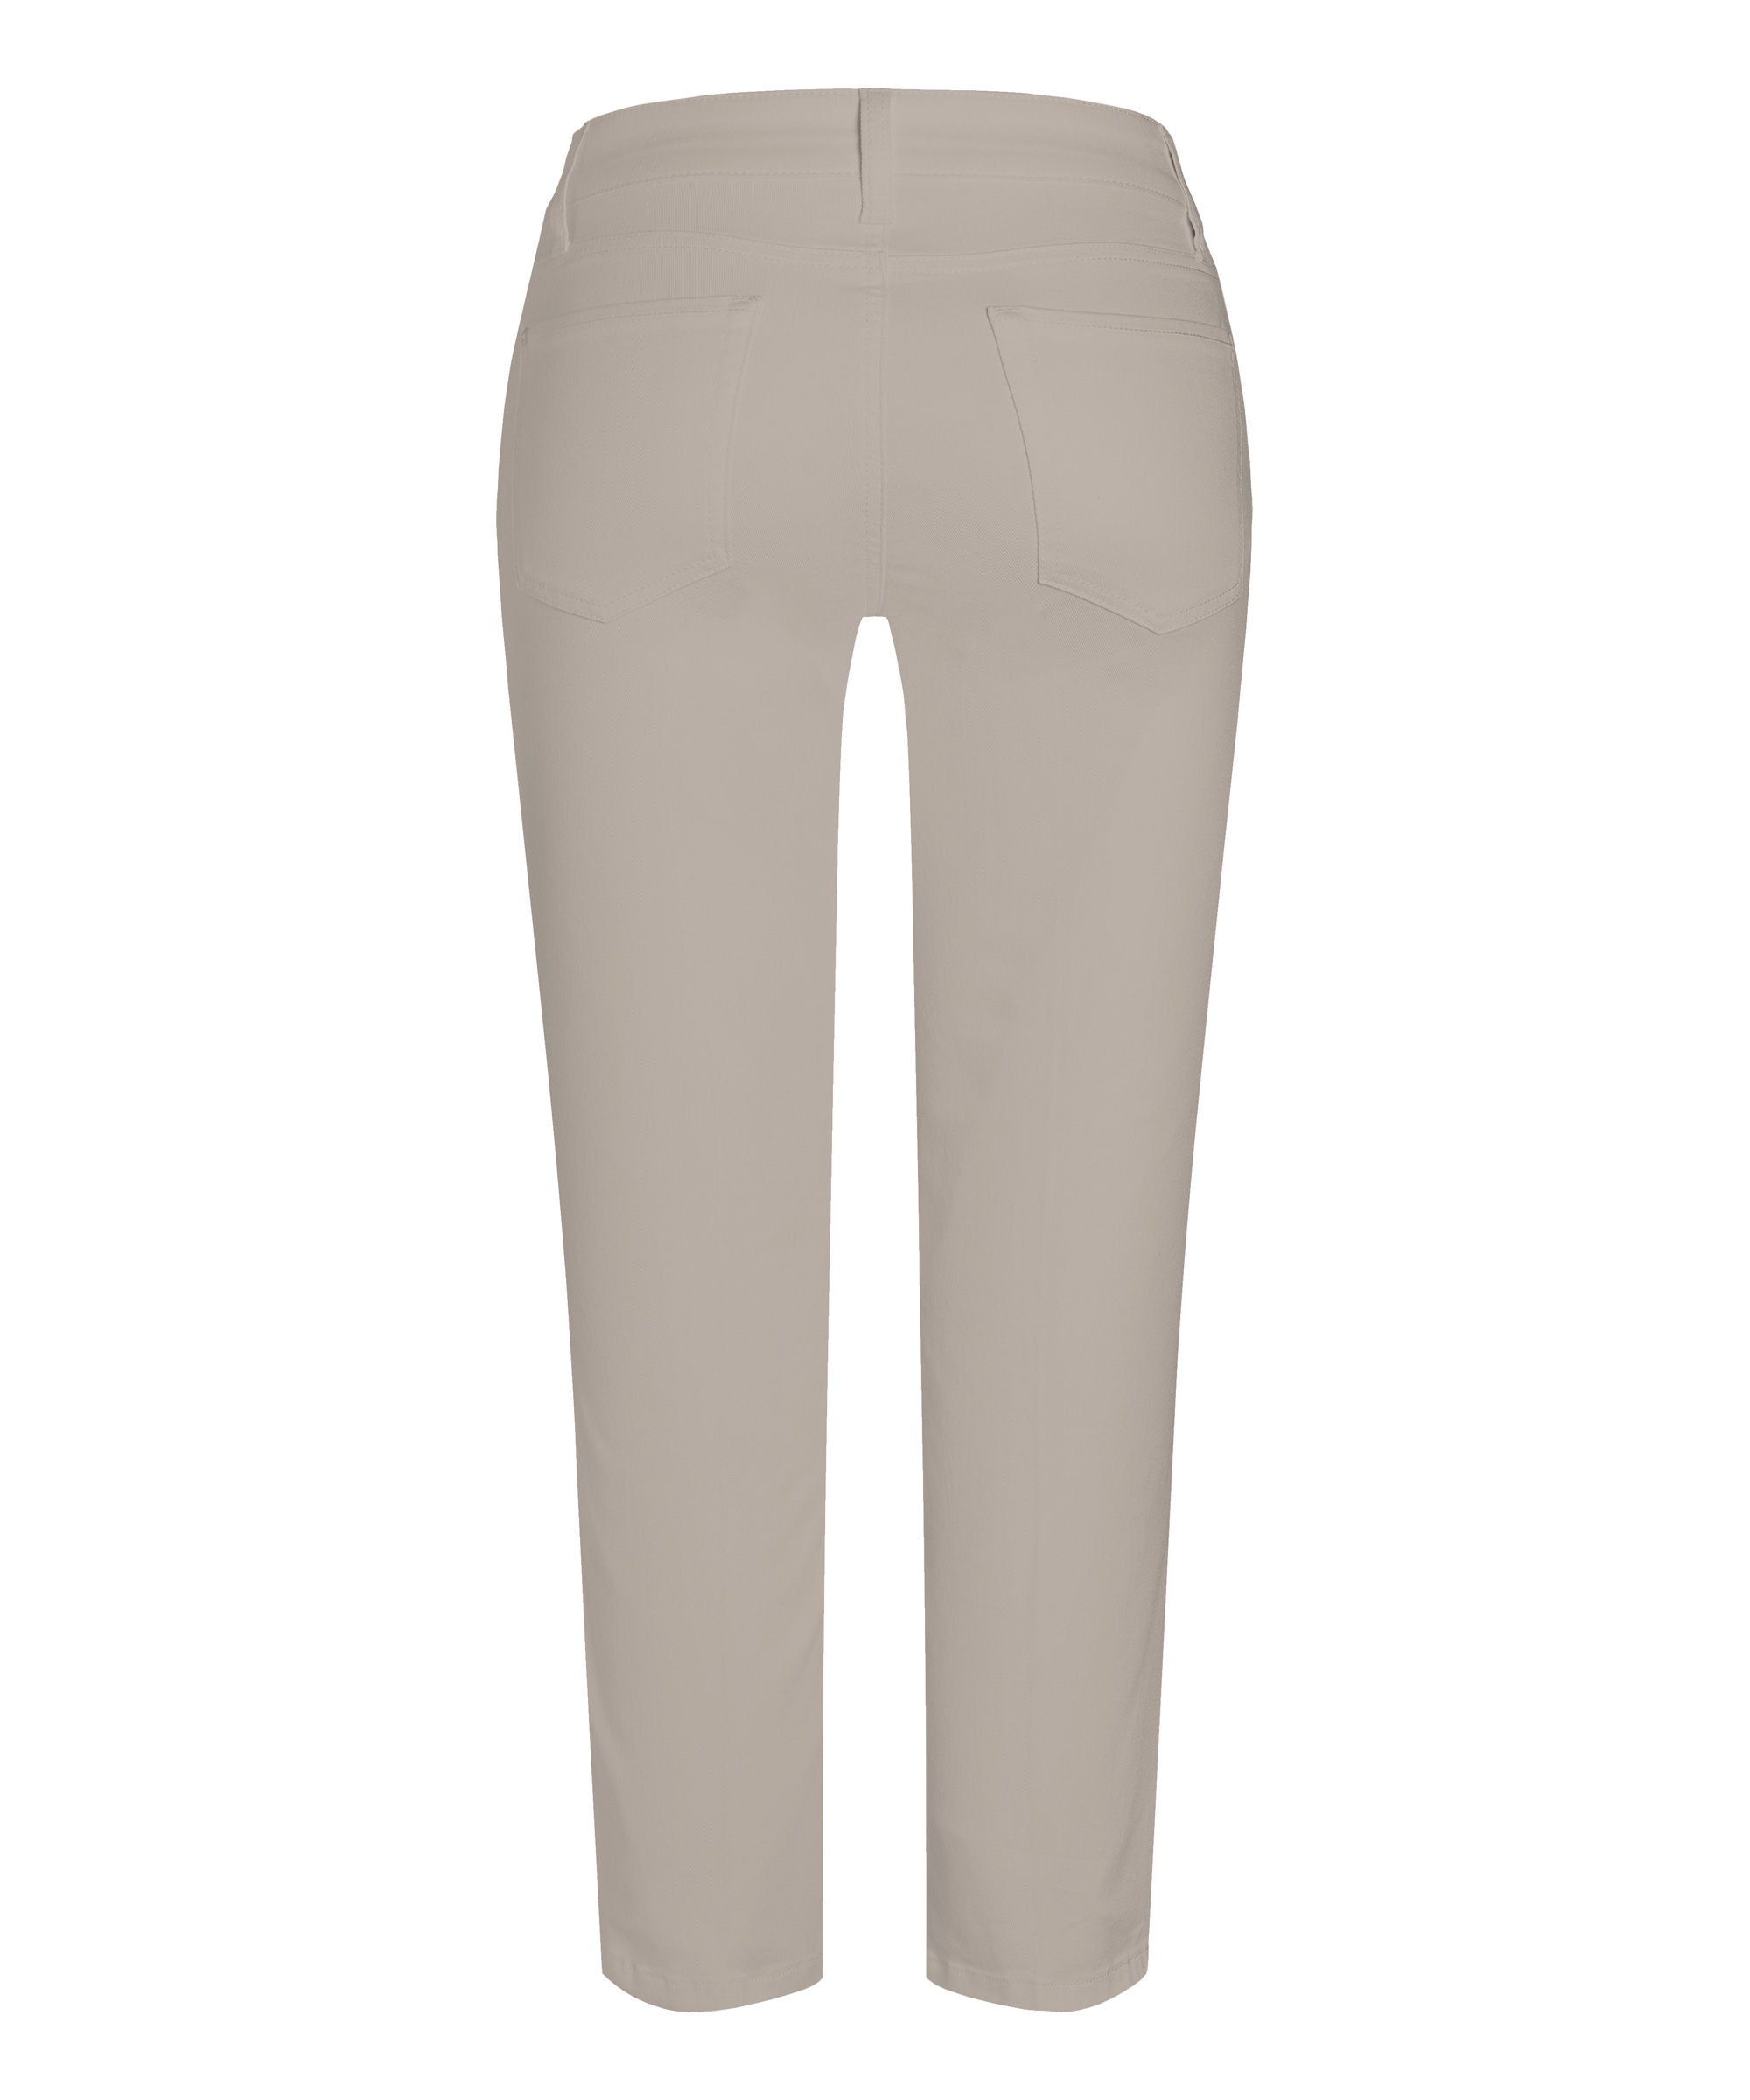 Cambio fabric trousers Paris straight Short LIGHT SAND